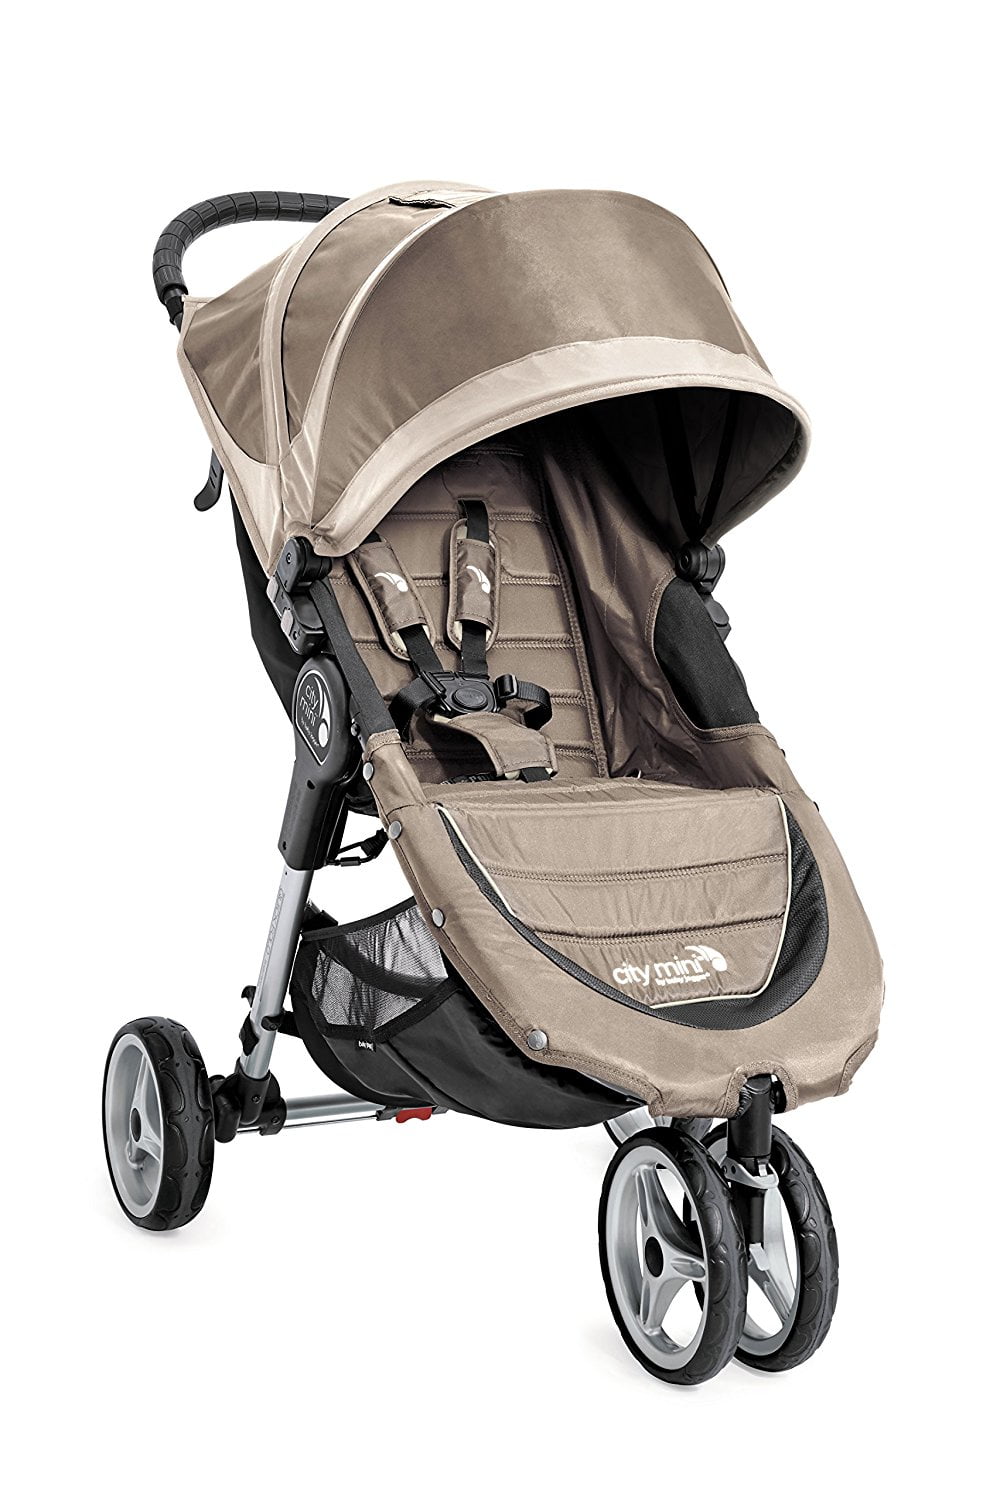 baby jogger 2016 city mini 3w single stroller